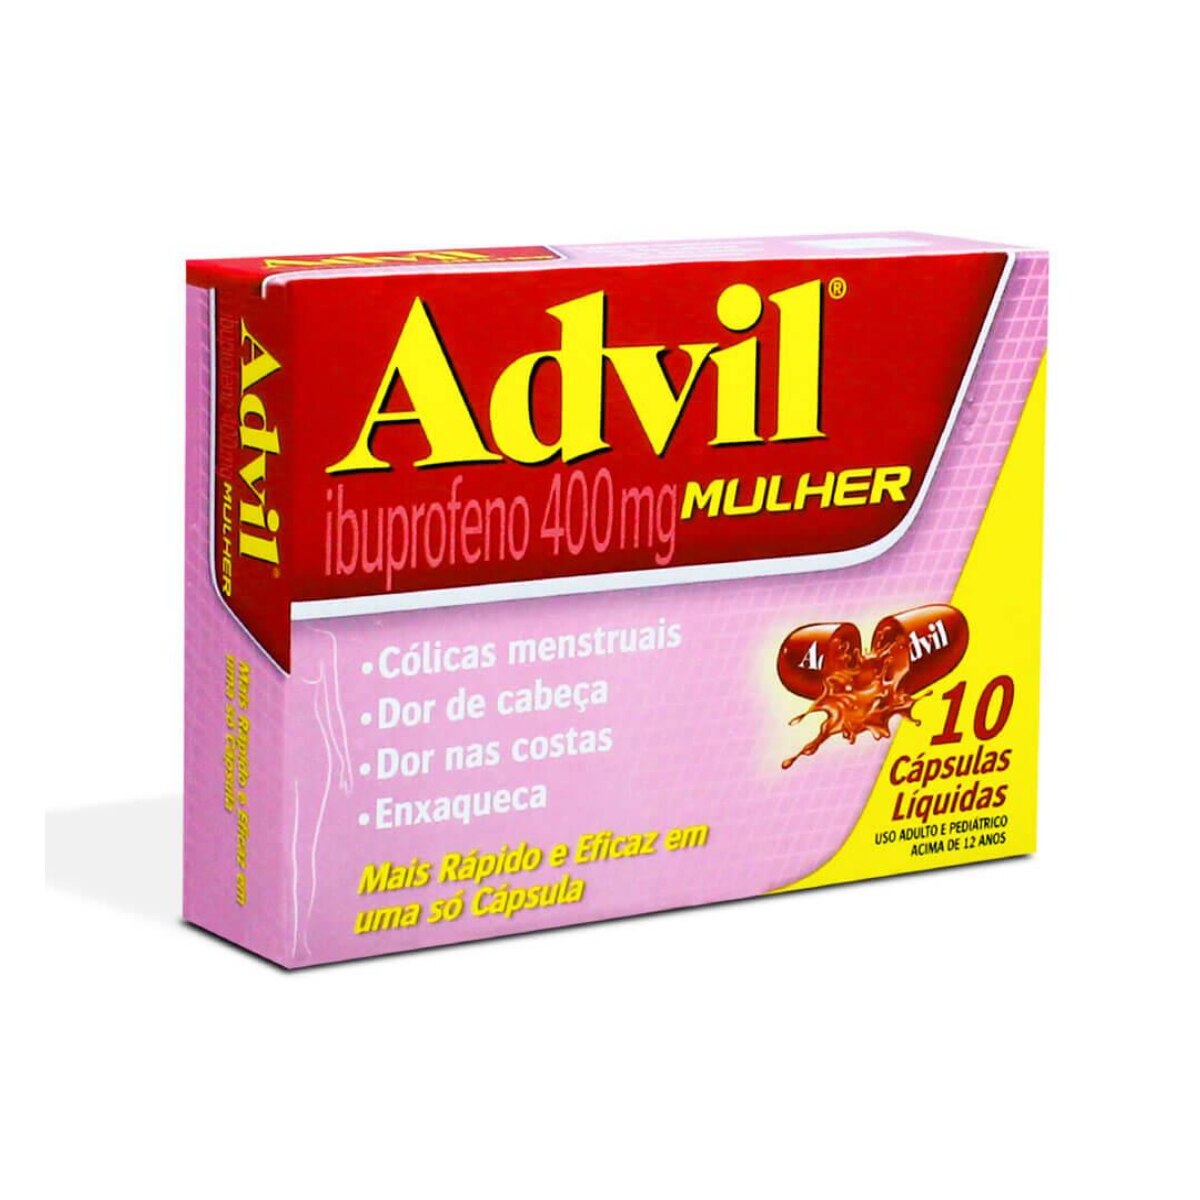 Advil Mulher 400mg 10 Capsulas